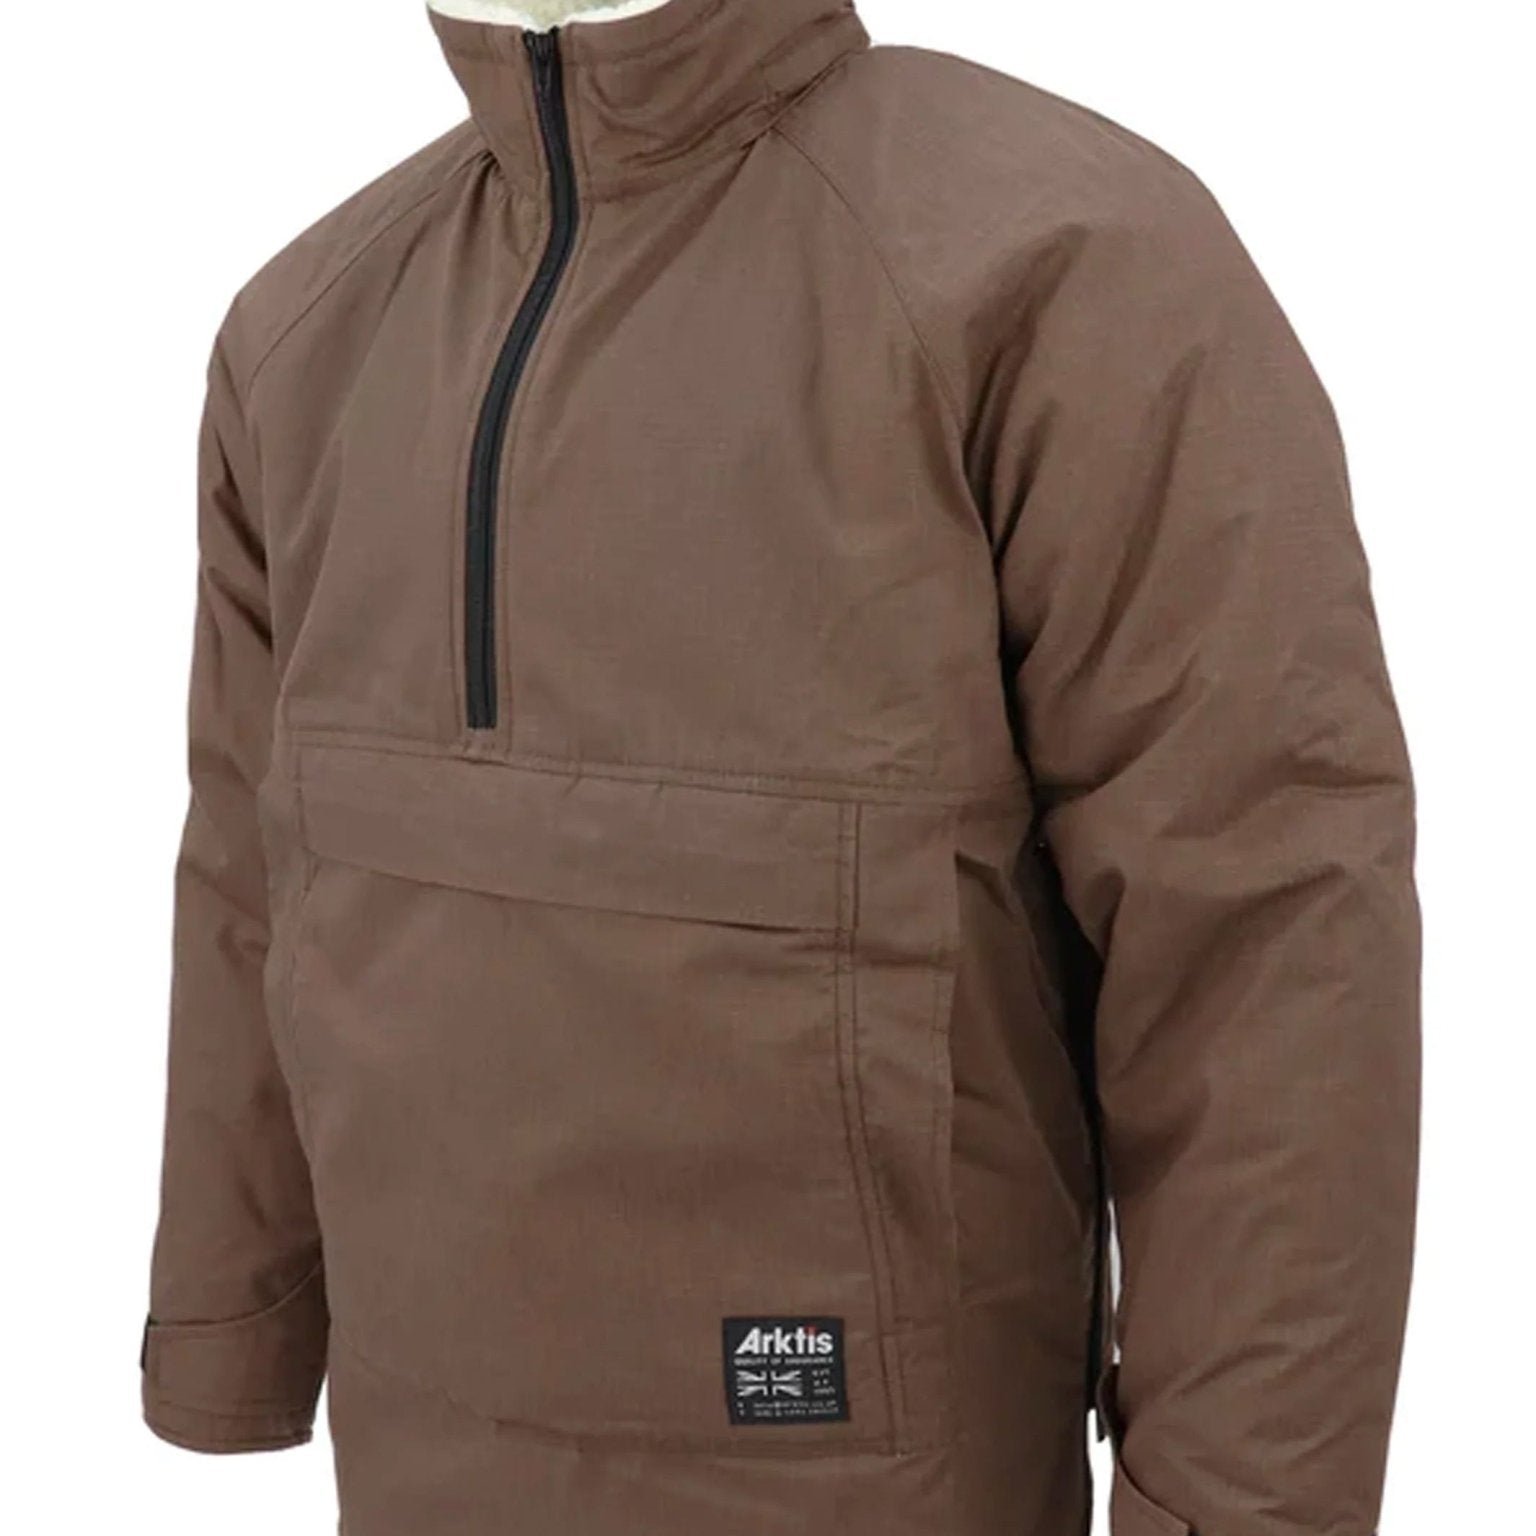 4elementsclothingArktisArktis - A220 MAMMOTH SHIRT / SMOCK / Mens Jacket / Mens coat - With Hood & warmlinedOuterwear